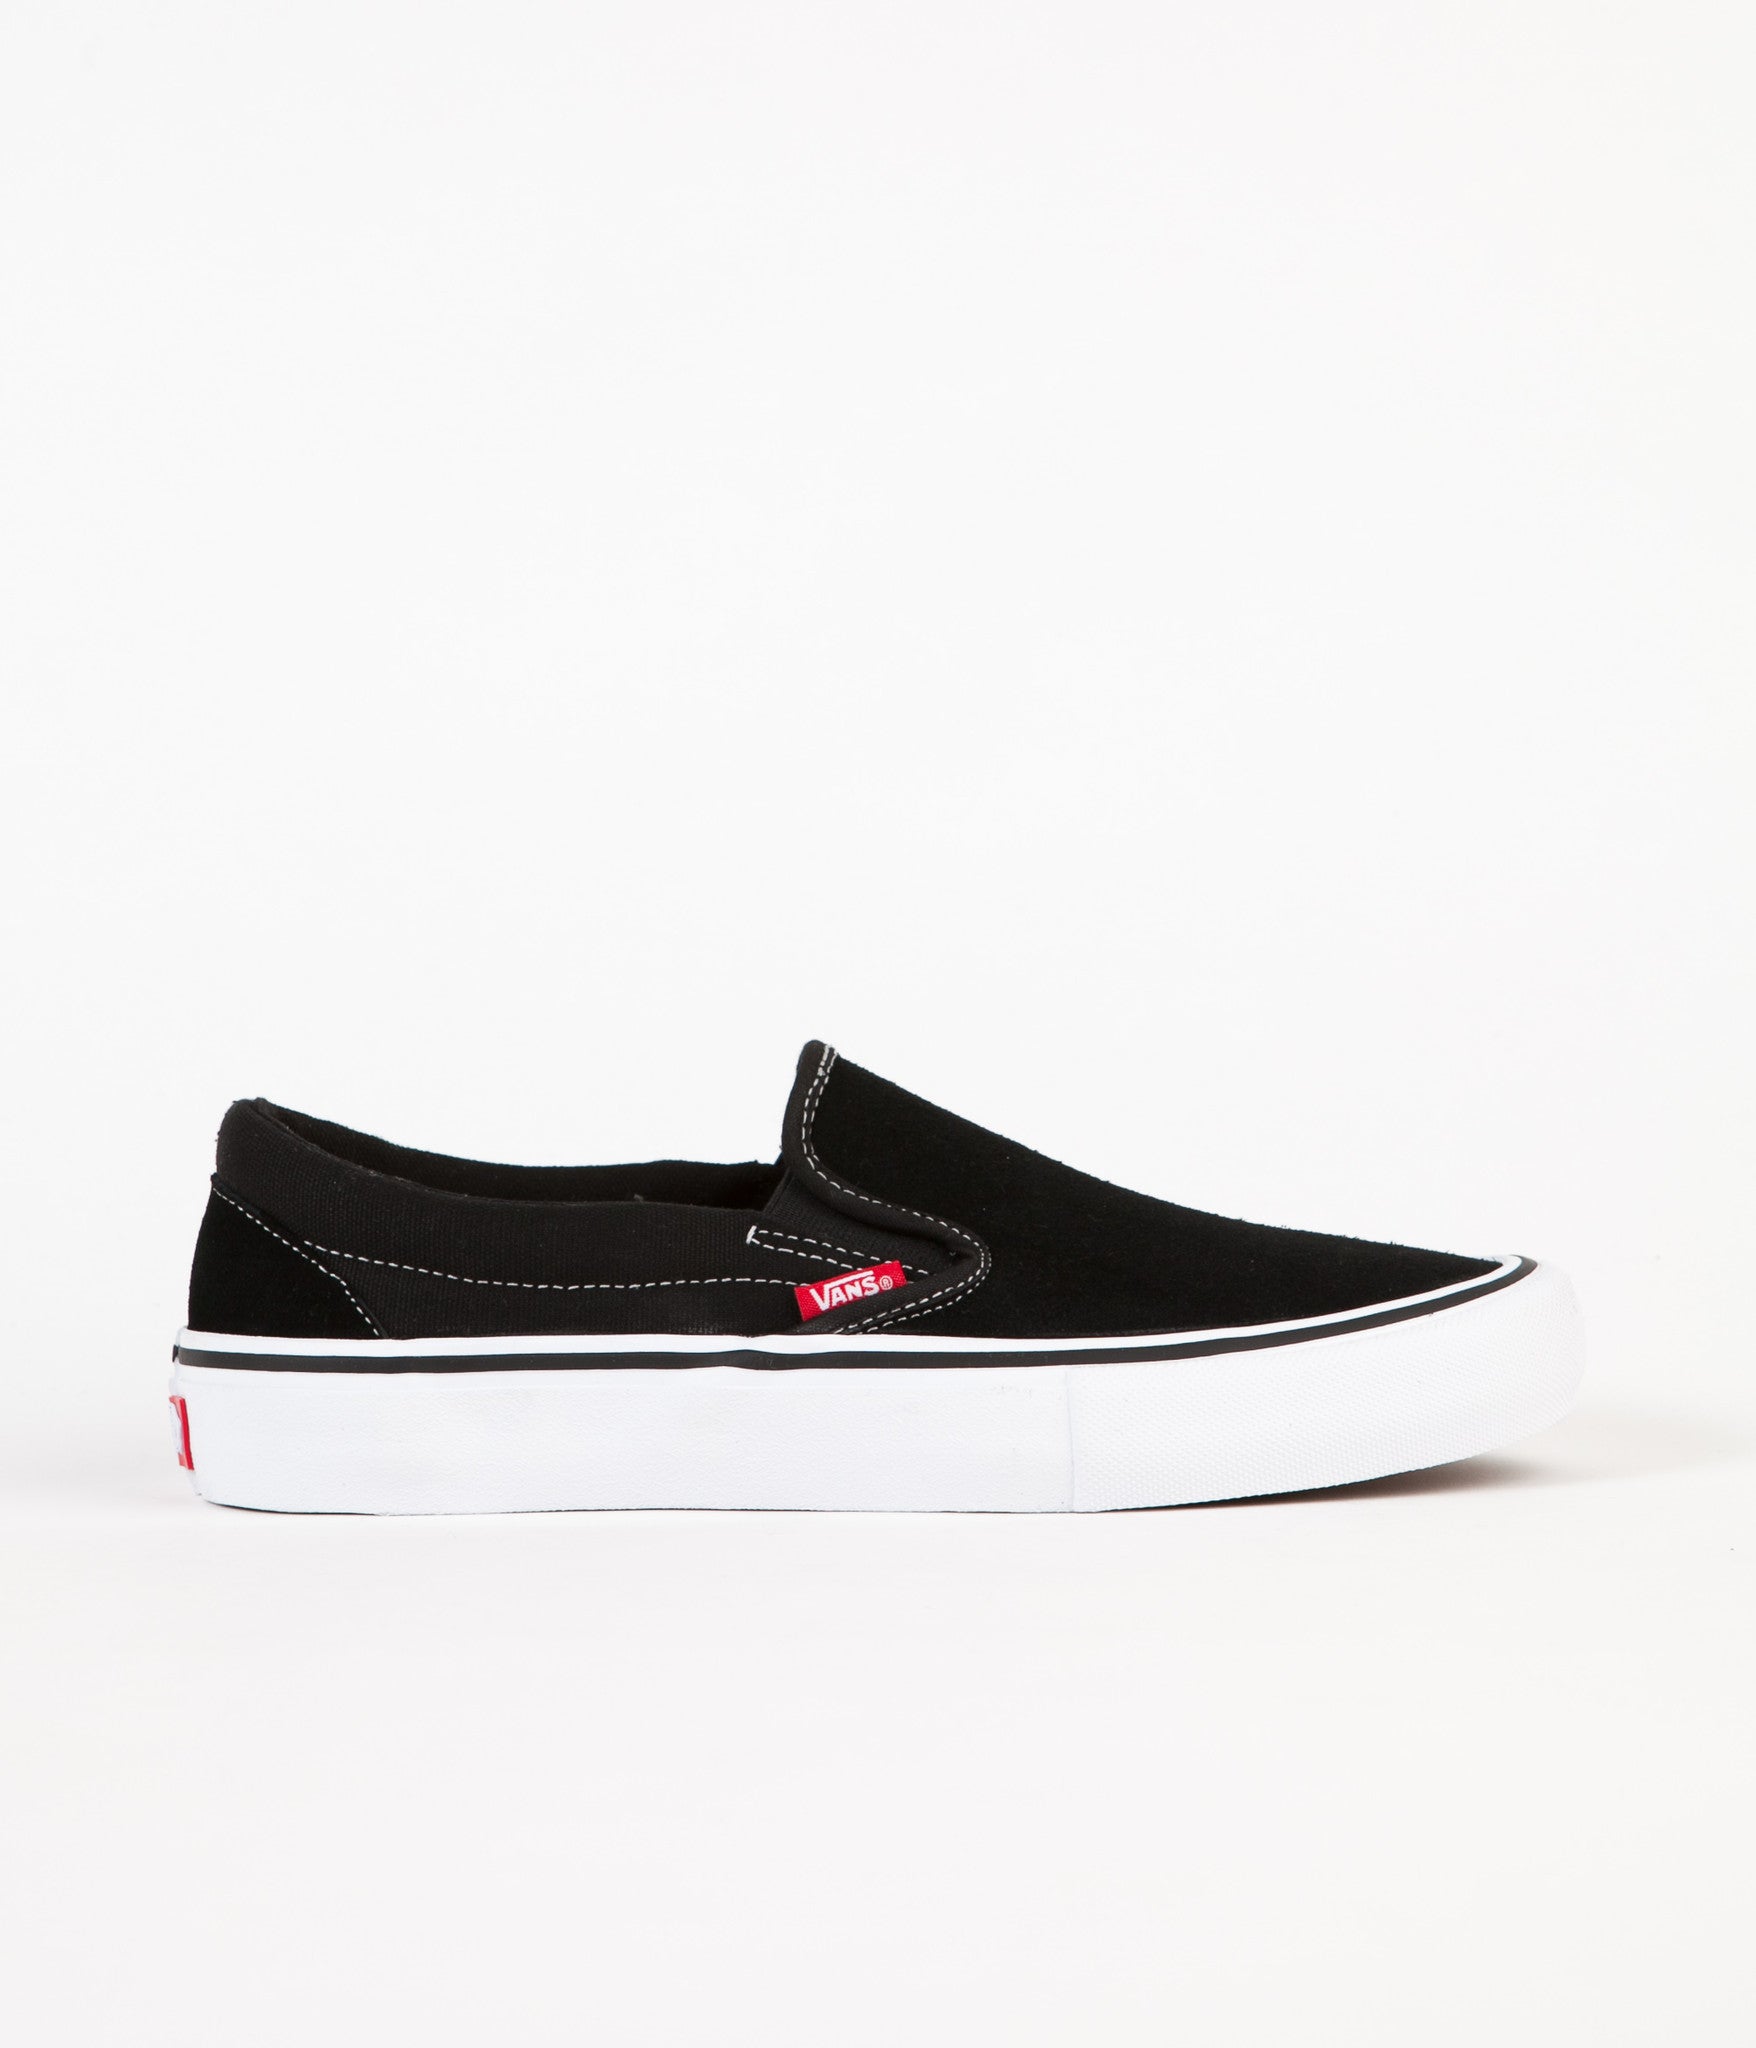 Vans Slip On Pro Shoes - Black / White / Gum | Flatspot